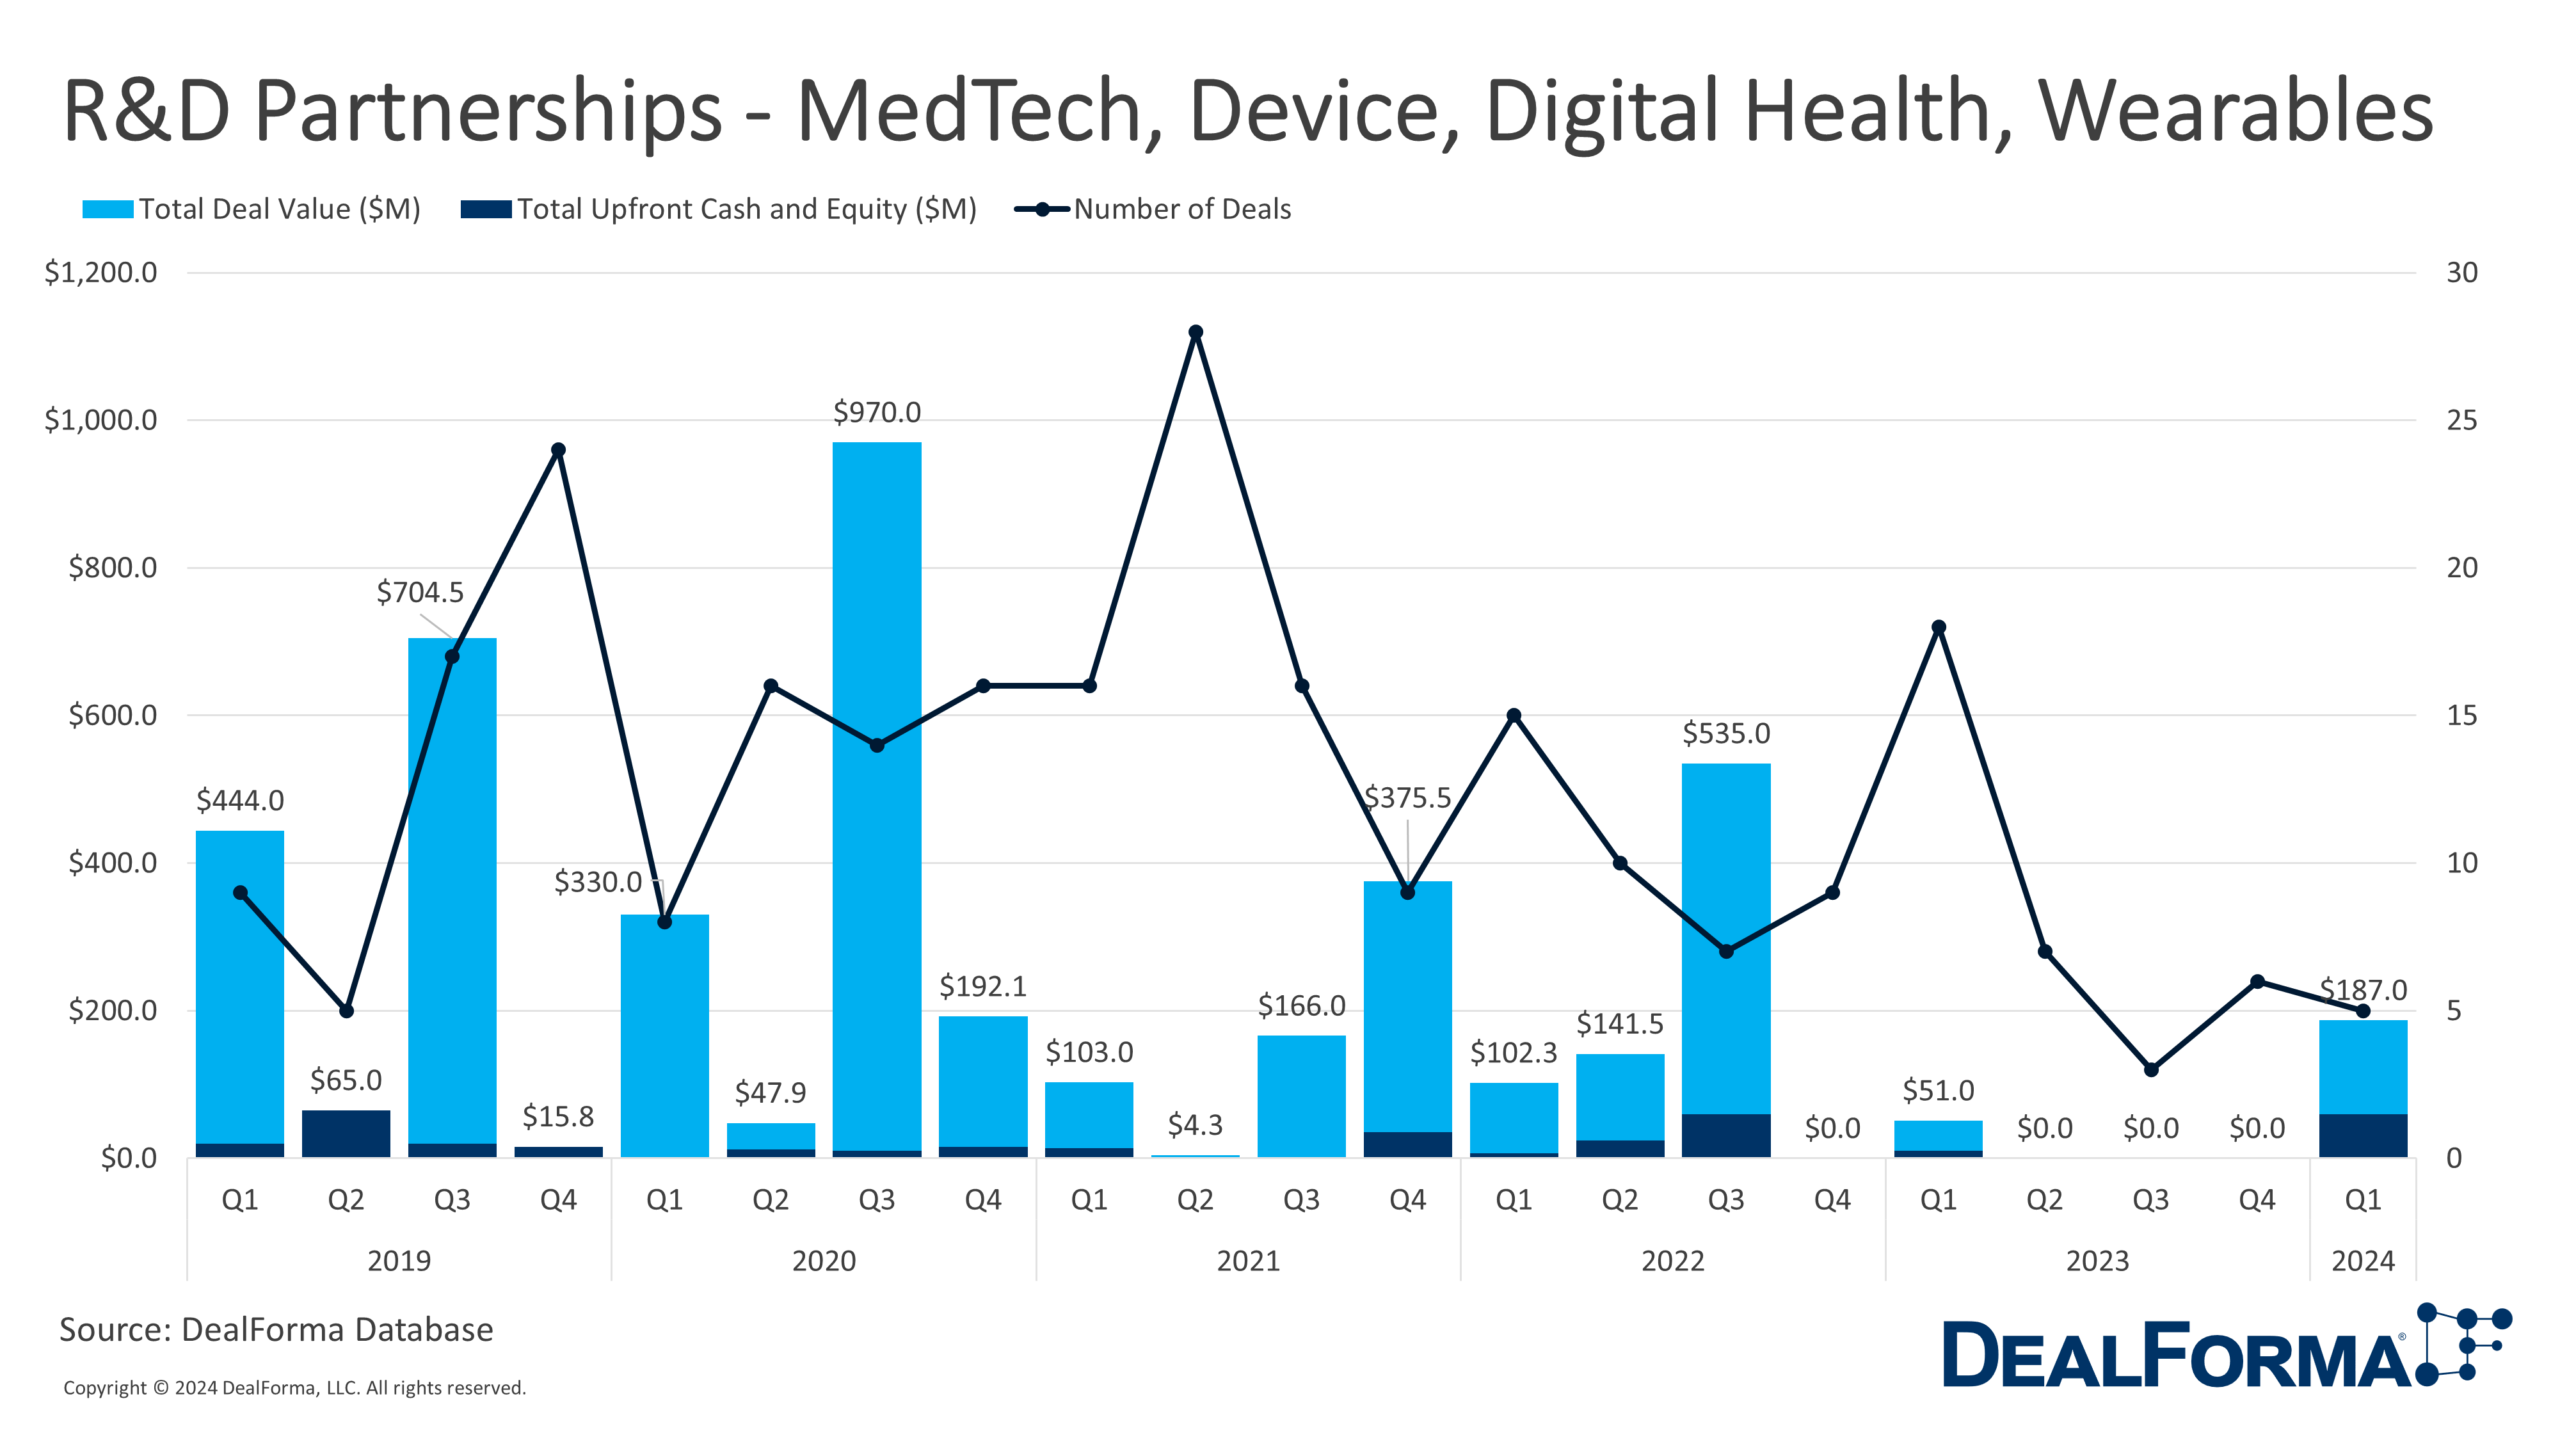 R&D Partnerships - MedTech, Device, Digital Health, Wearables